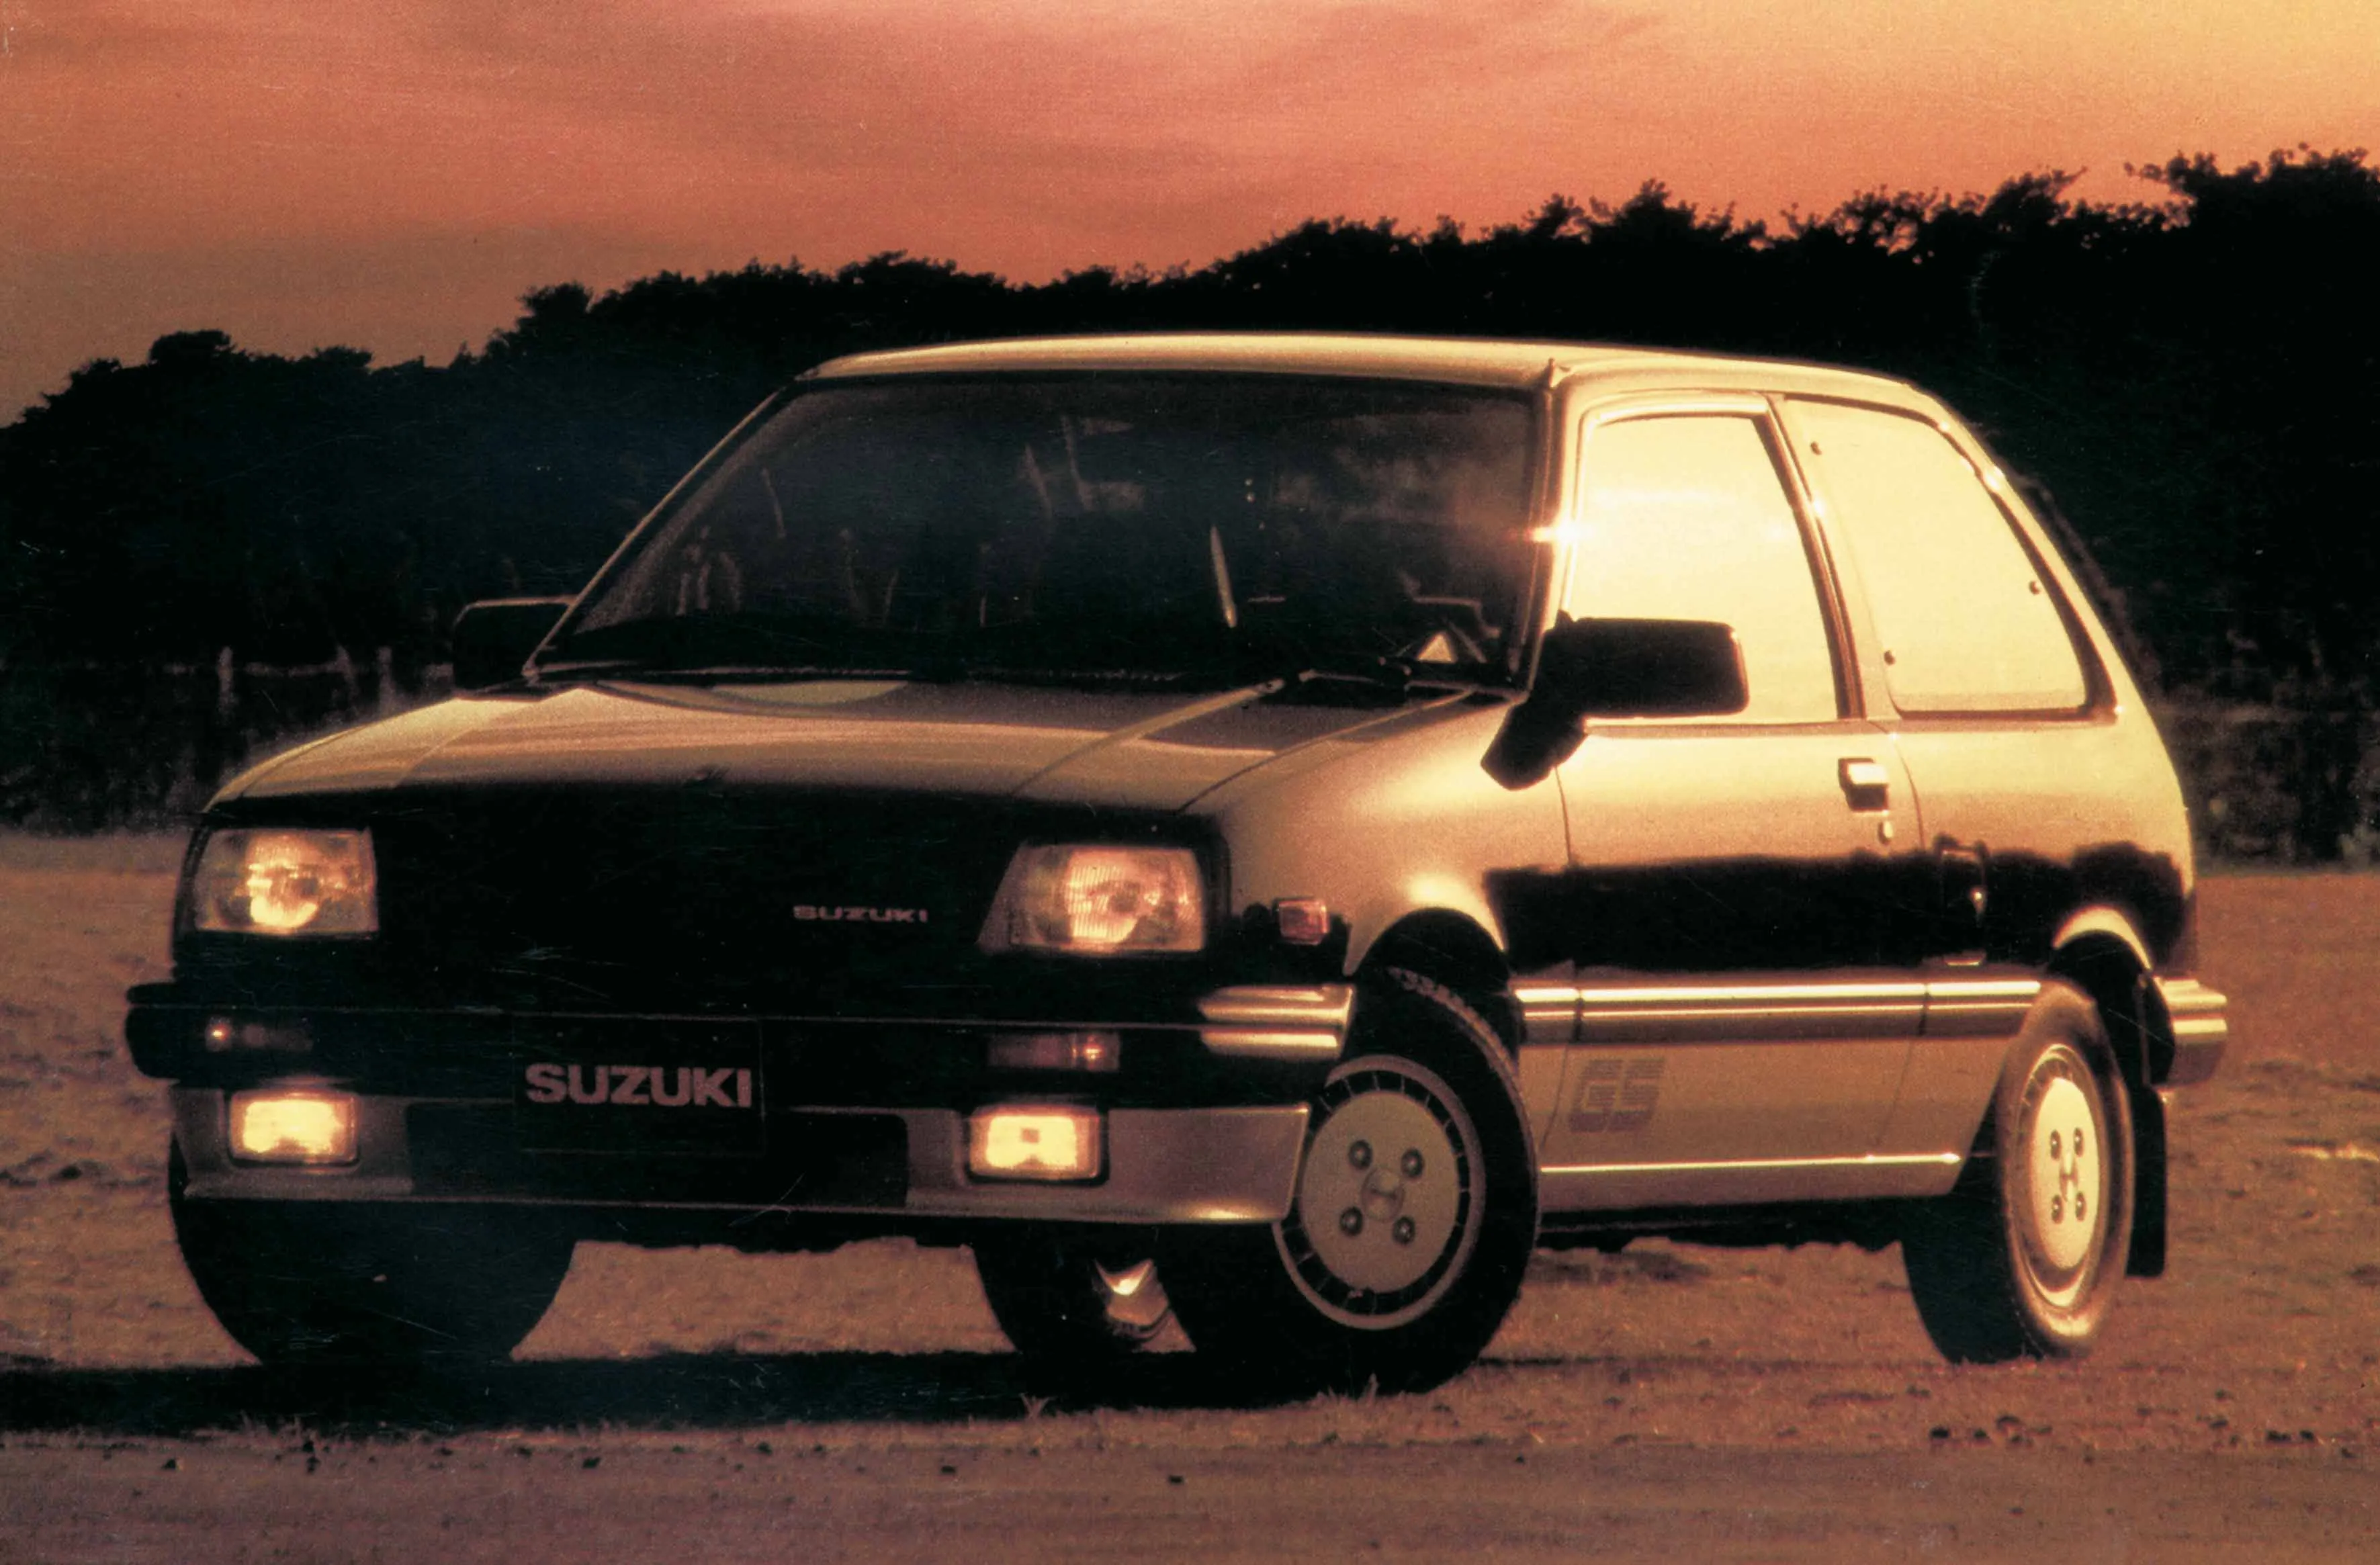 Suzuki Swift 1.3 1985 photo - 7